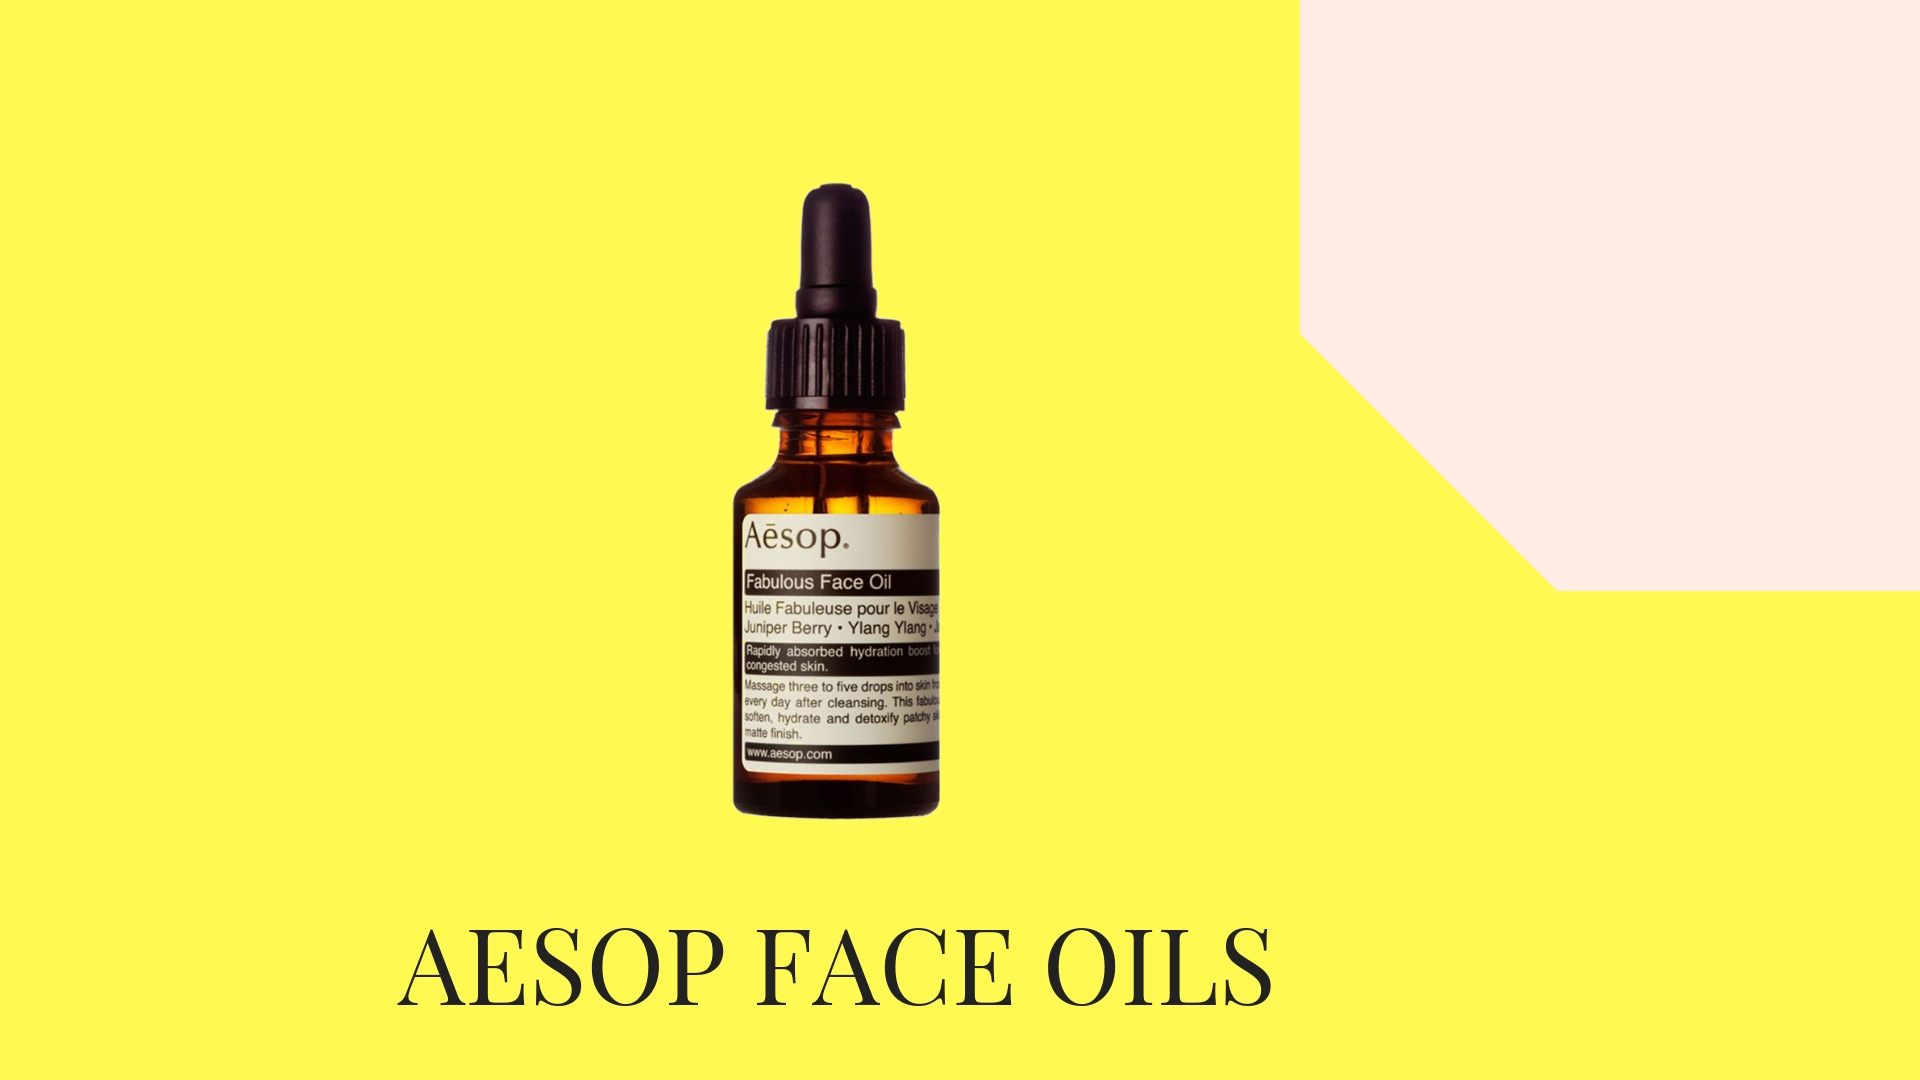 aesop face oils - the edit.jpg